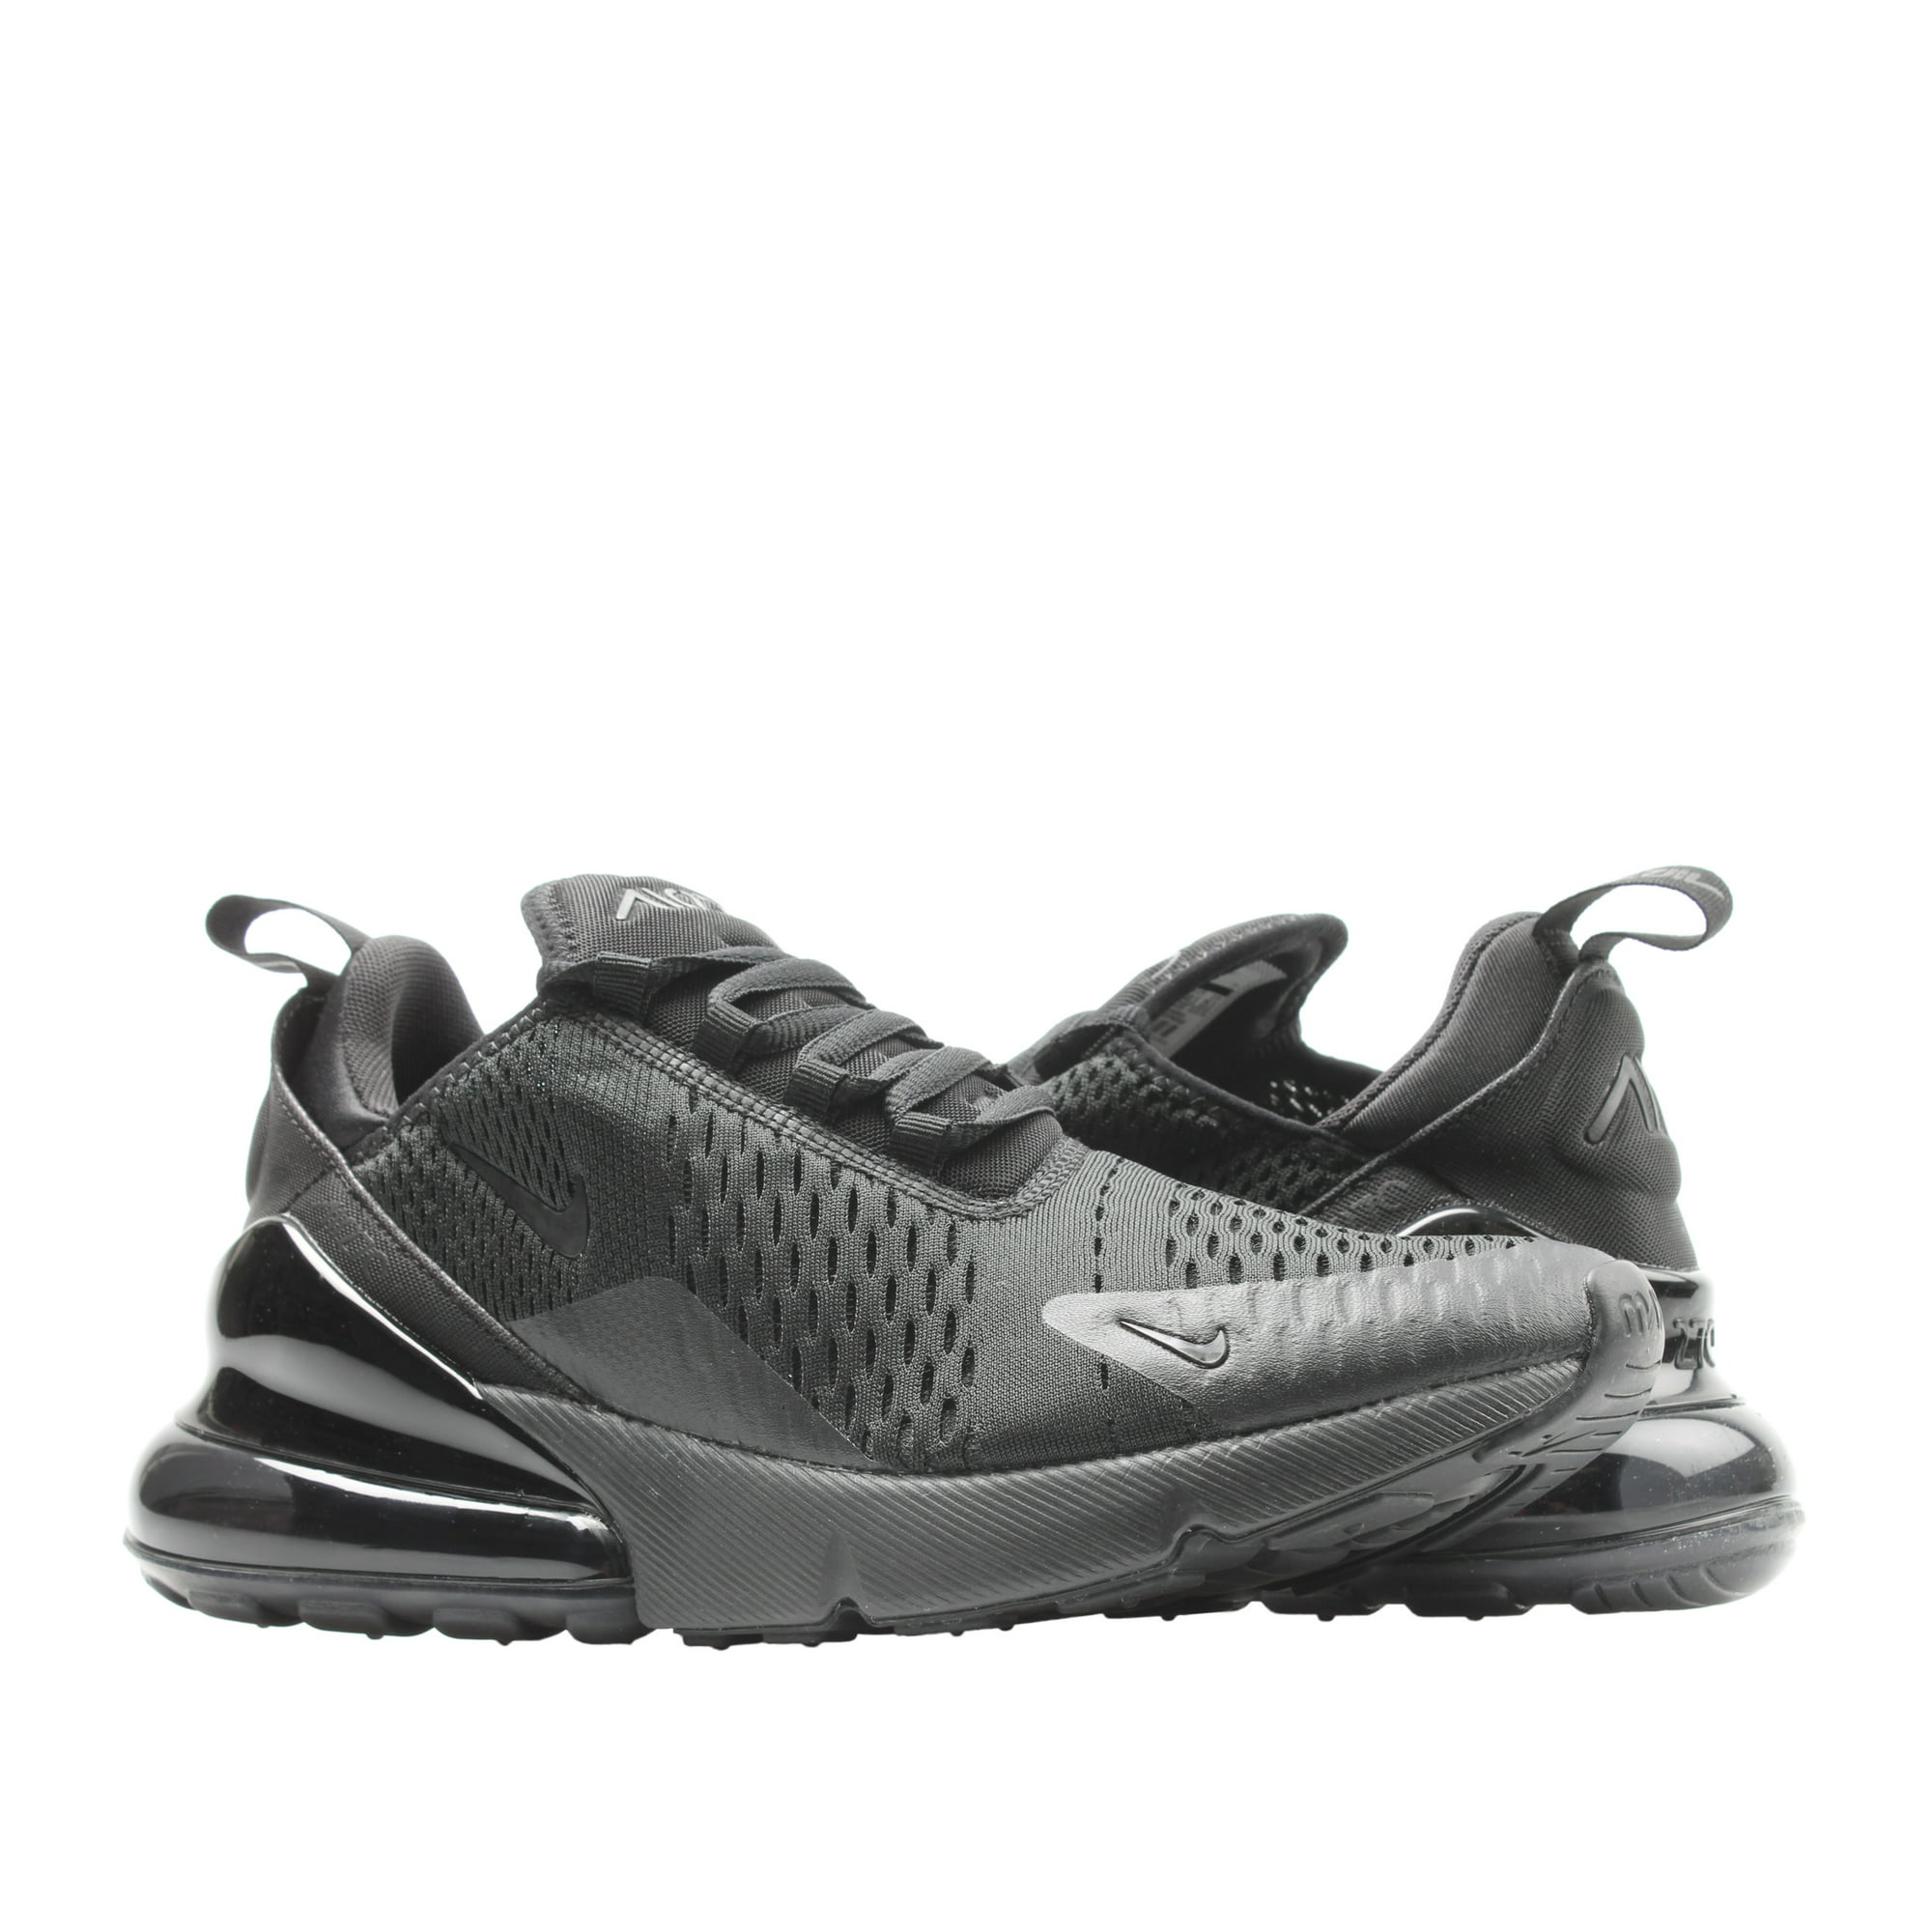 Nike Air Men's Shoes Black/Black-Black - Walmart.com